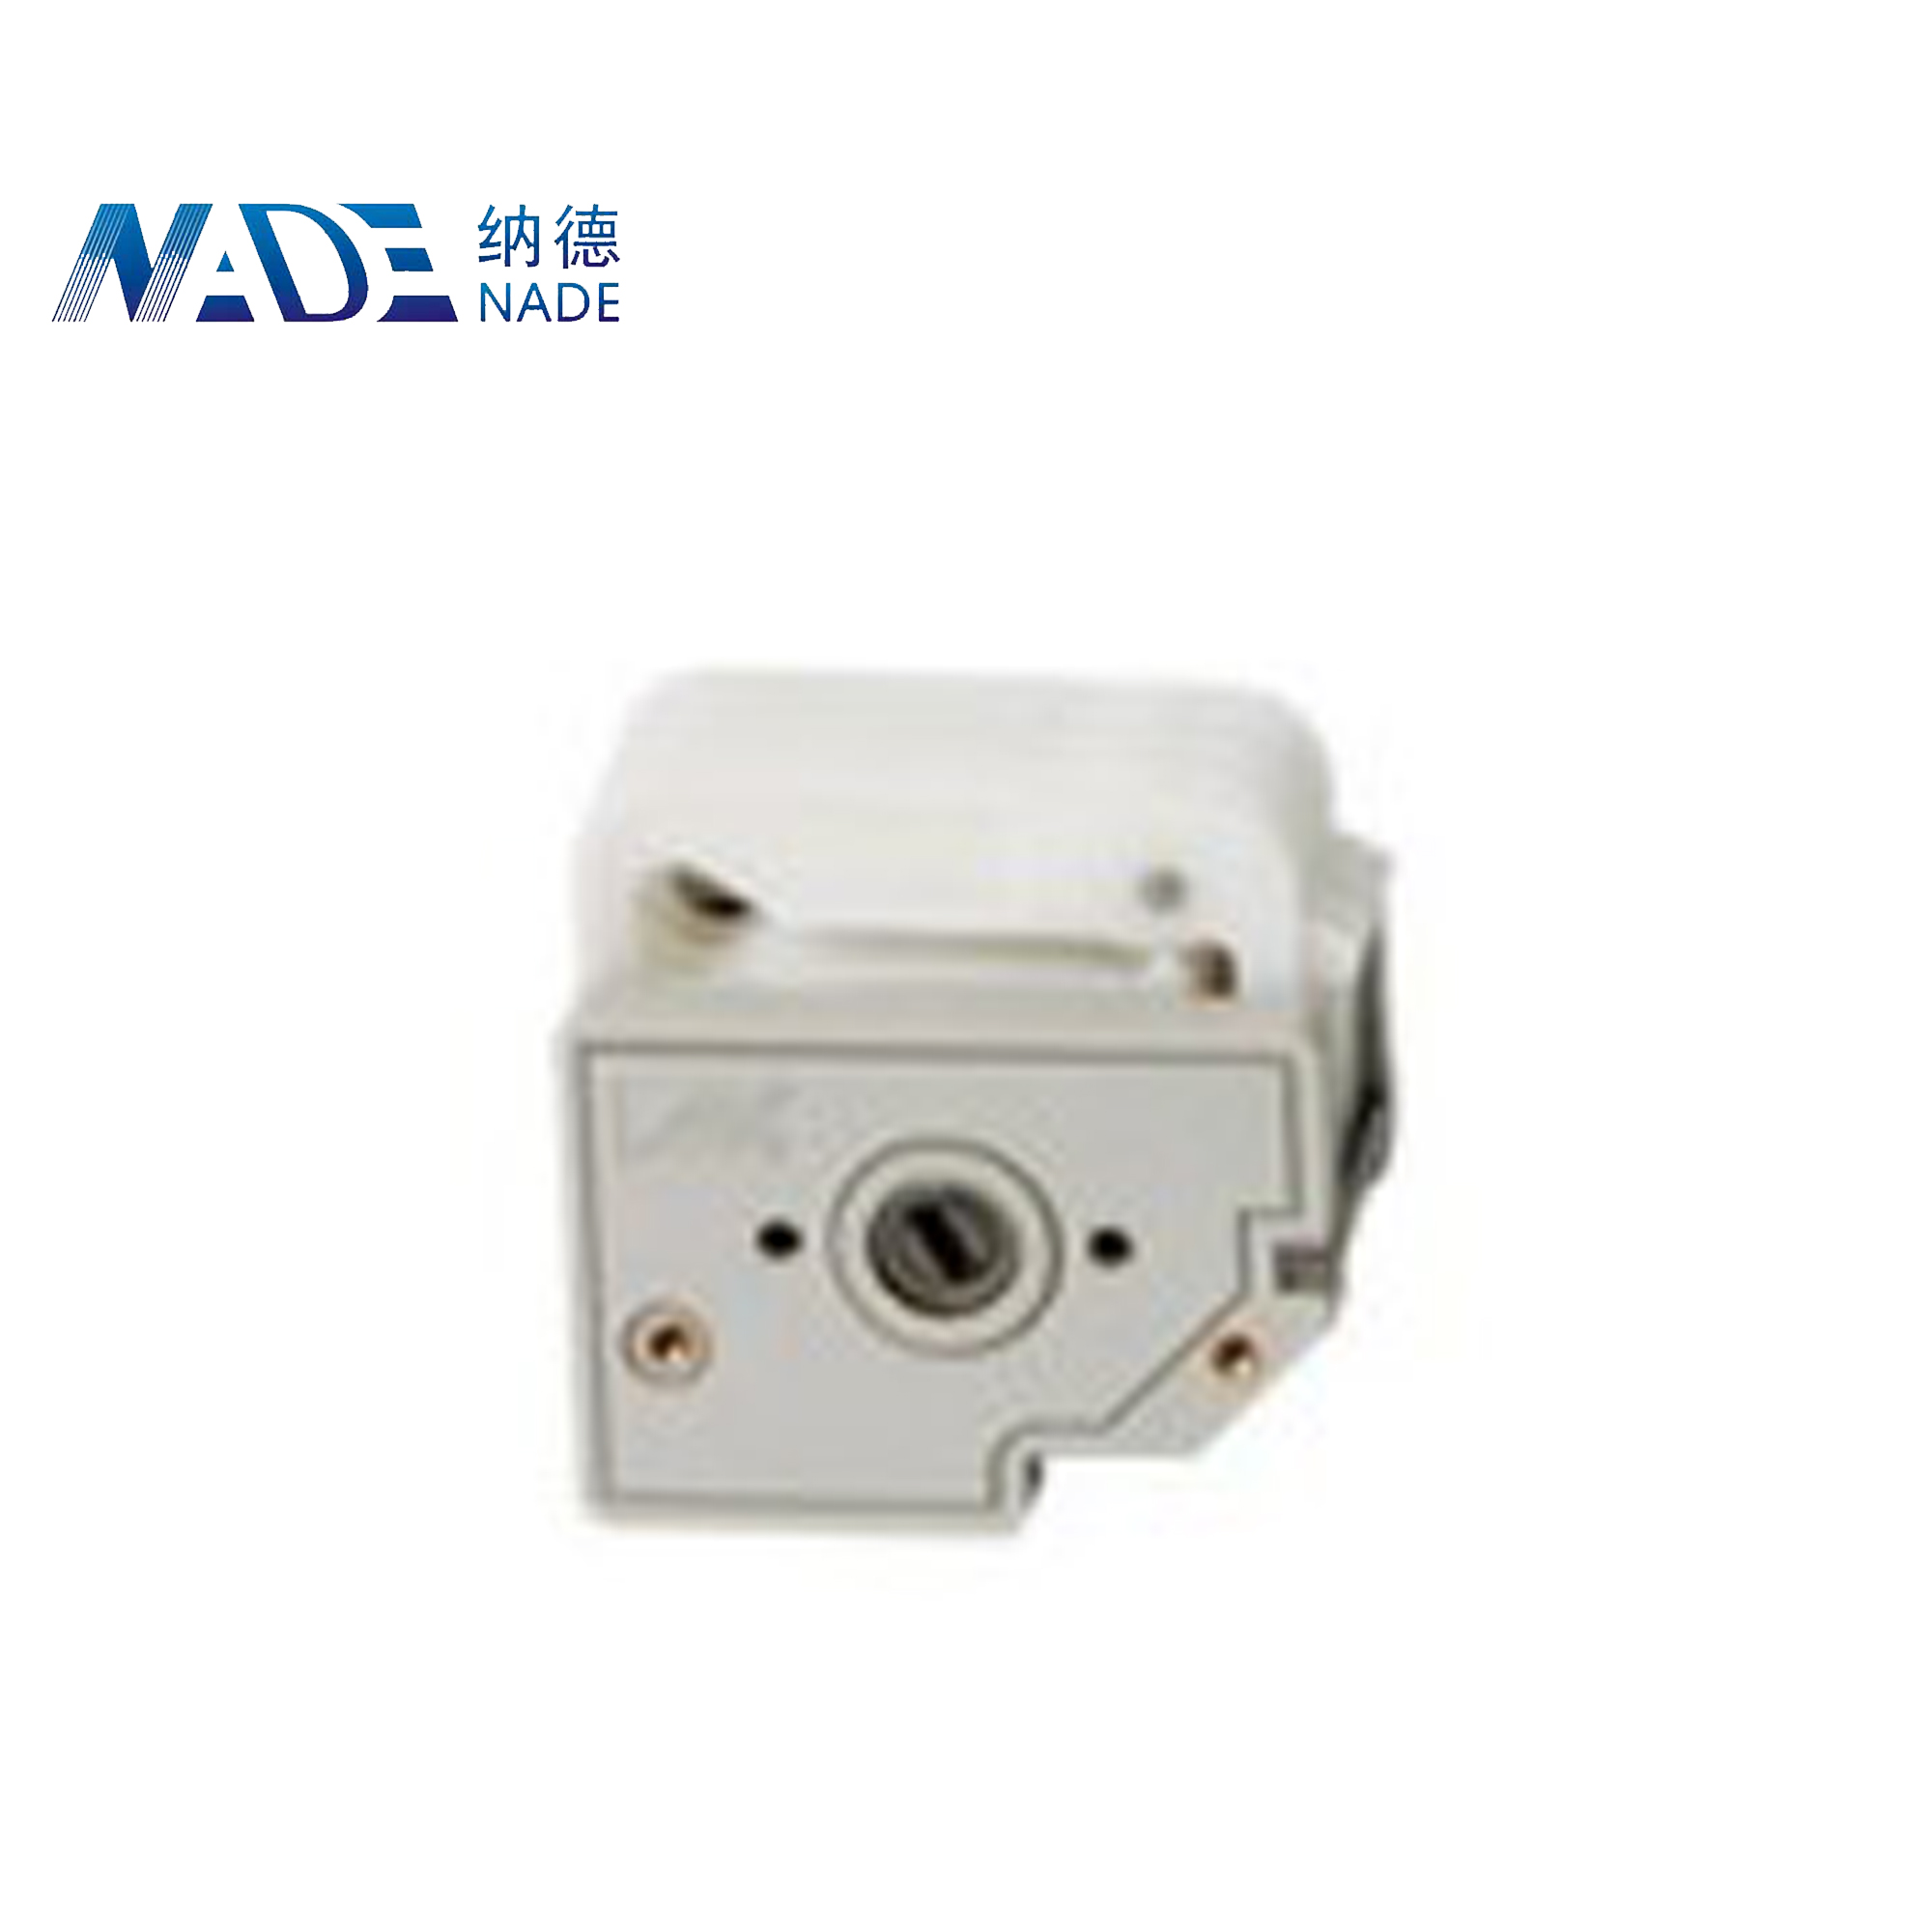 Nade Lab Equipment Peristaltic pump Head DG-(1,2,4,6,8,12)6 Rollers